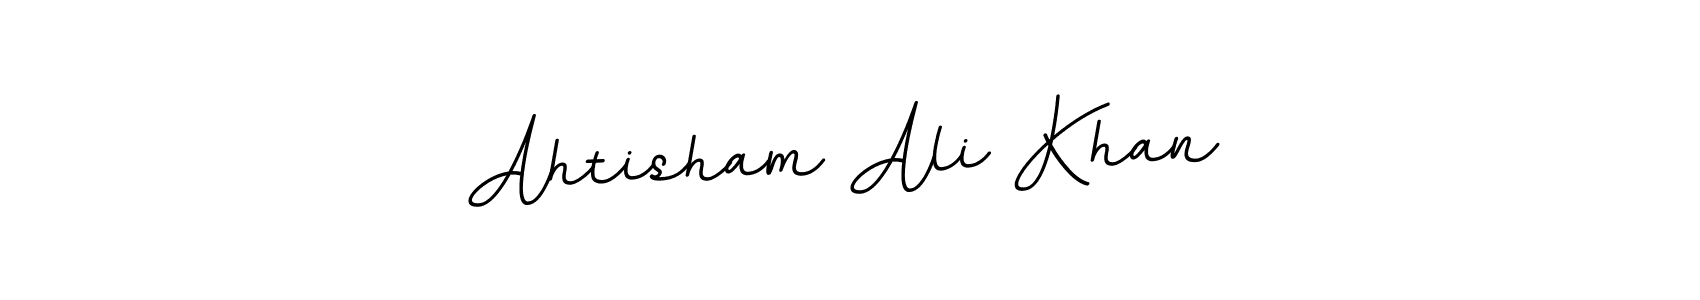 How to Draw Ahtisham Ali Khan signature style? BallpointsItalic-DORy9 is a latest design signature styles for name Ahtisham Ali Khan. Ahtisham Ali Khan signature style 11 images and pictures png